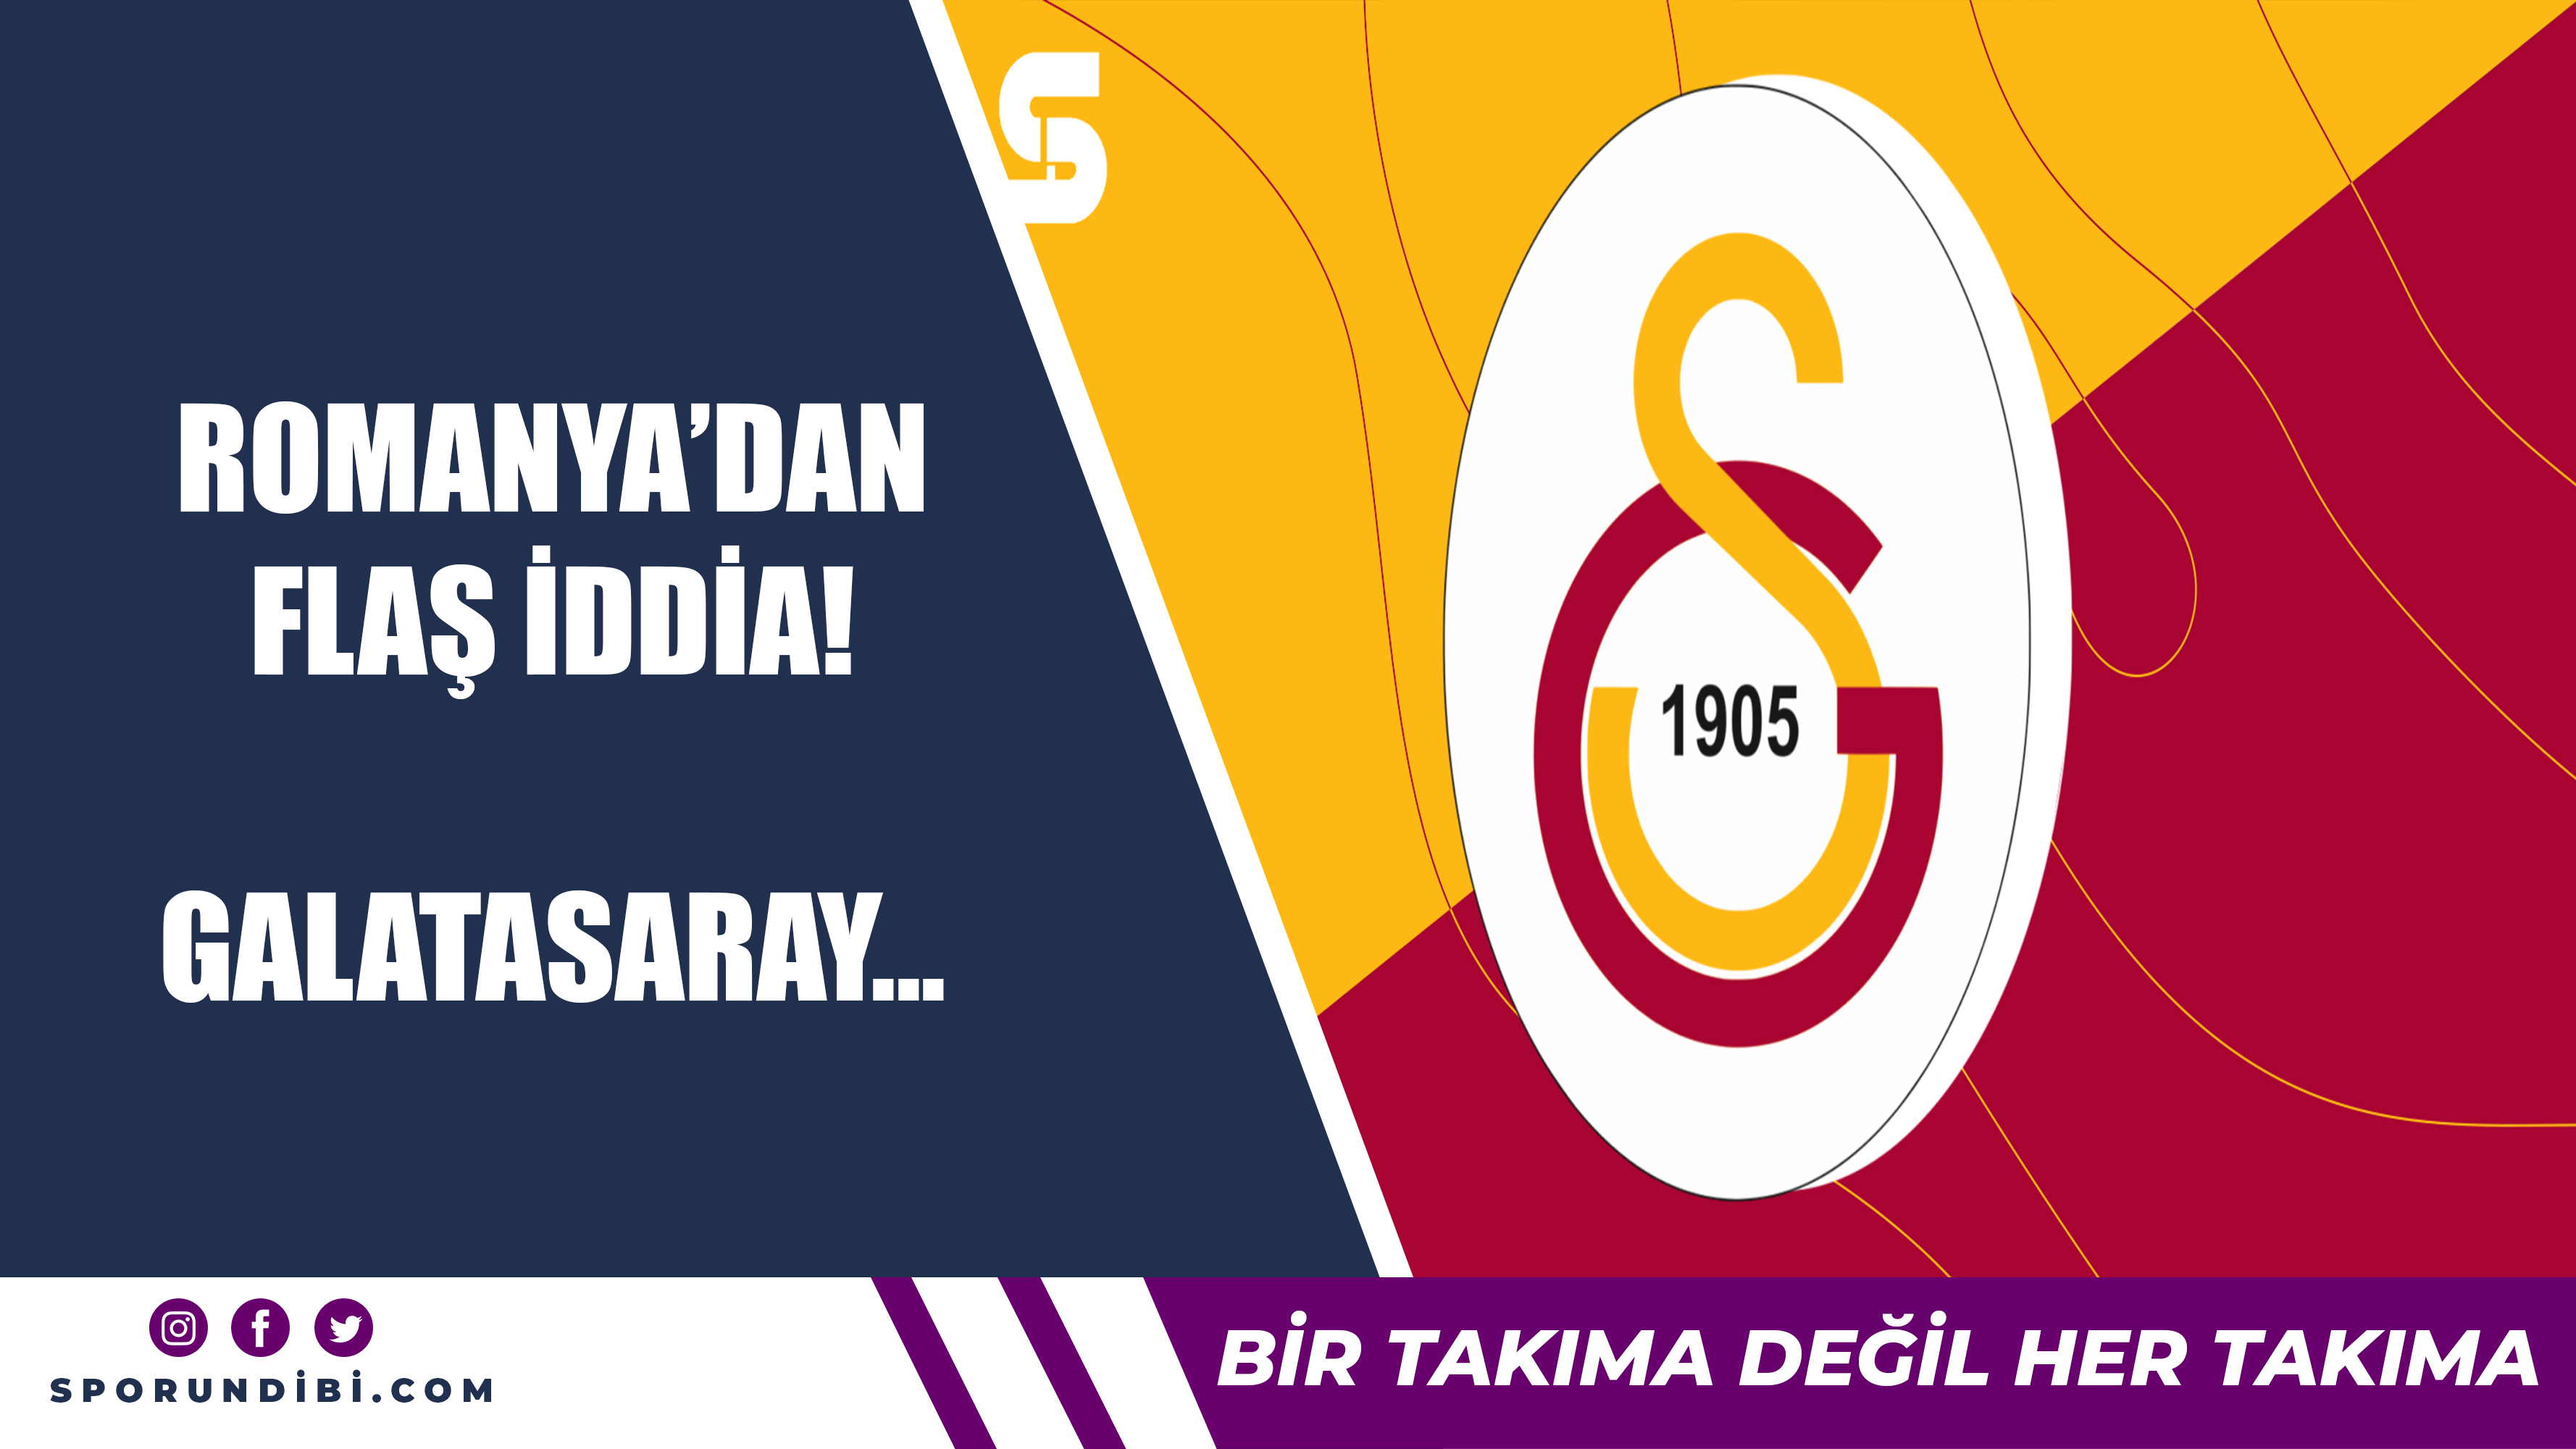 Romanya'dan flaş iddia! Galatasaray...